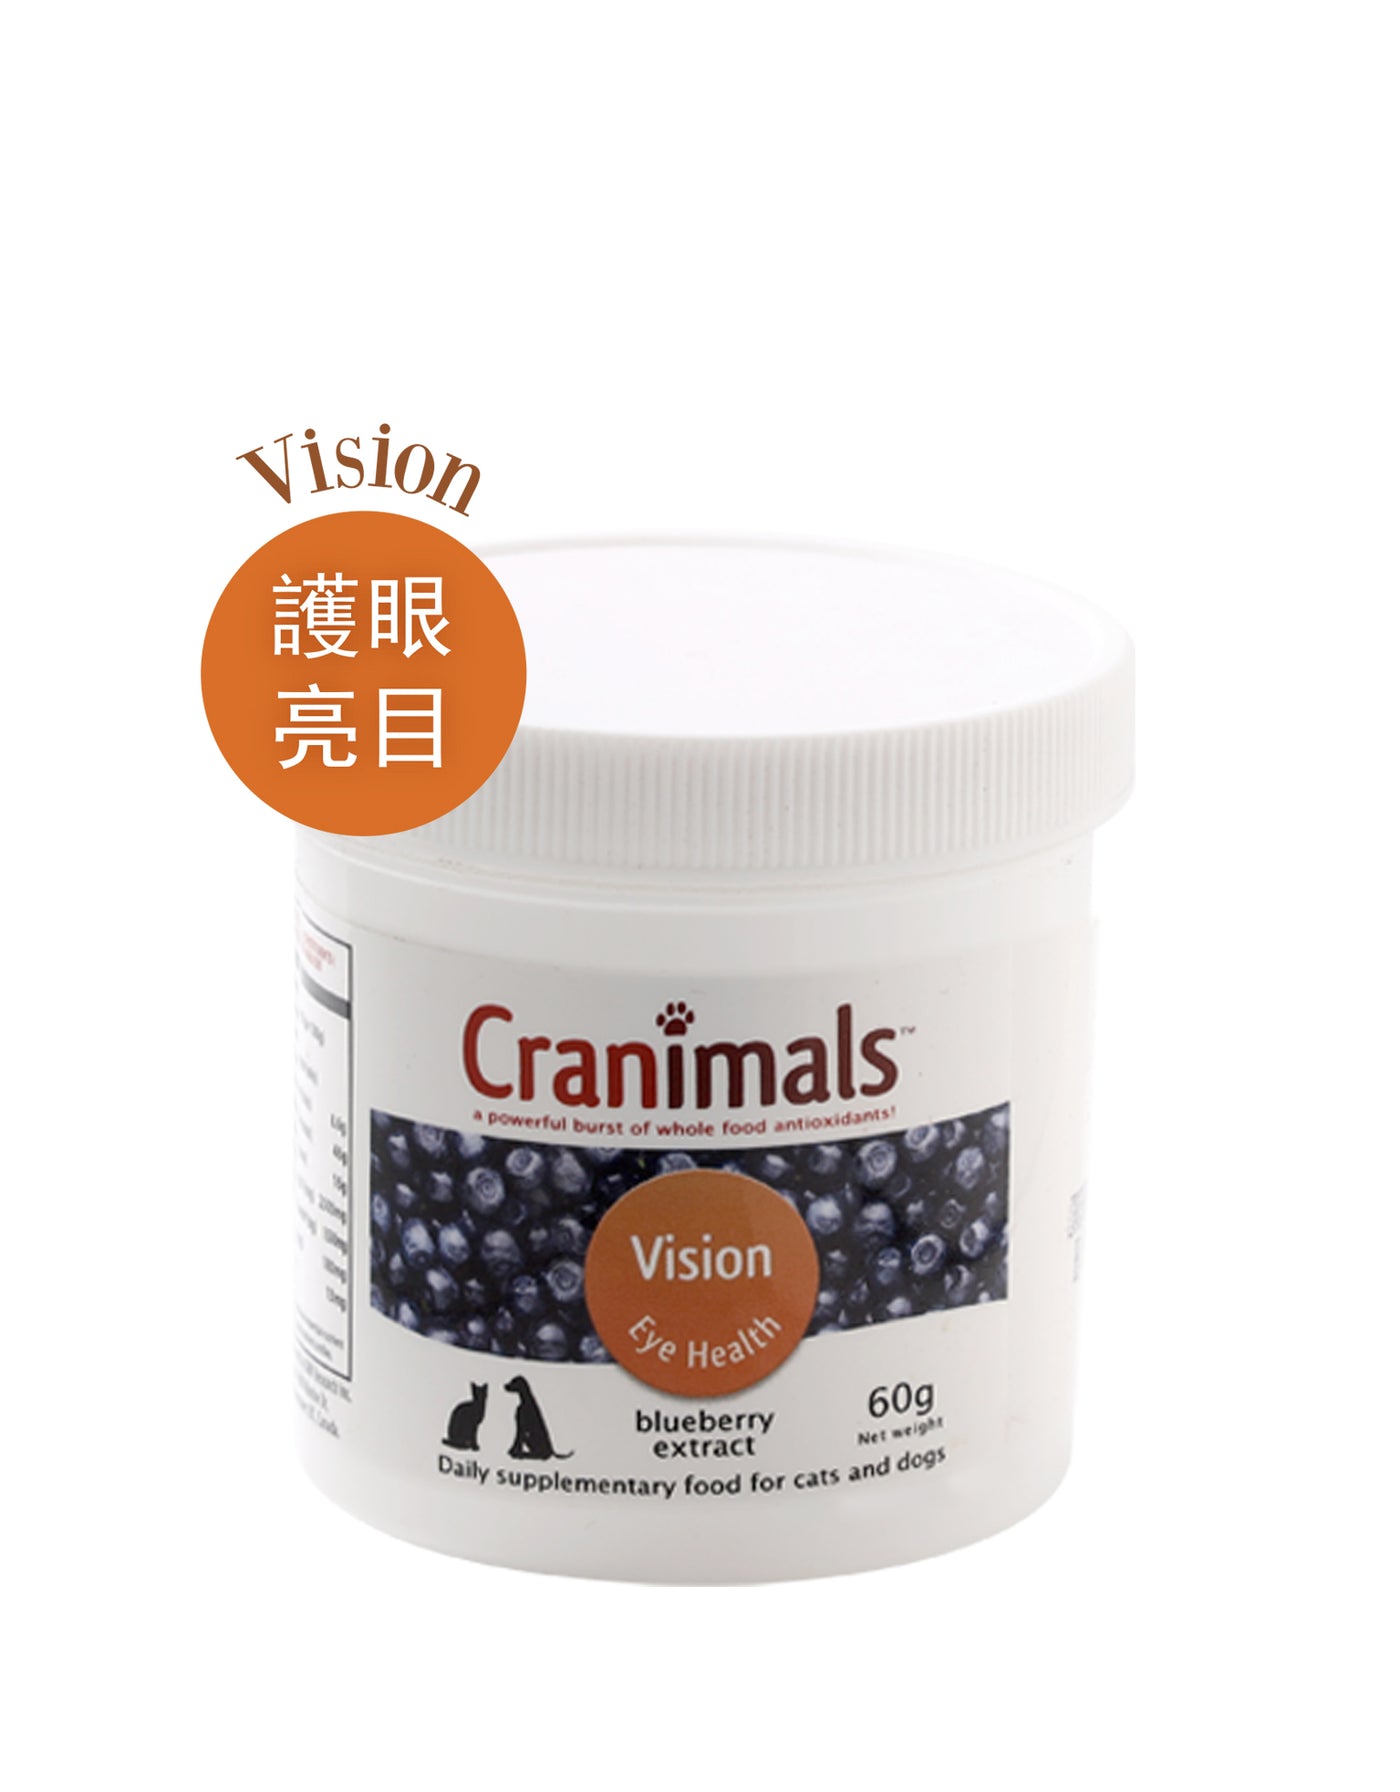 Cranimals Vision - Eye Health Pet Supplement